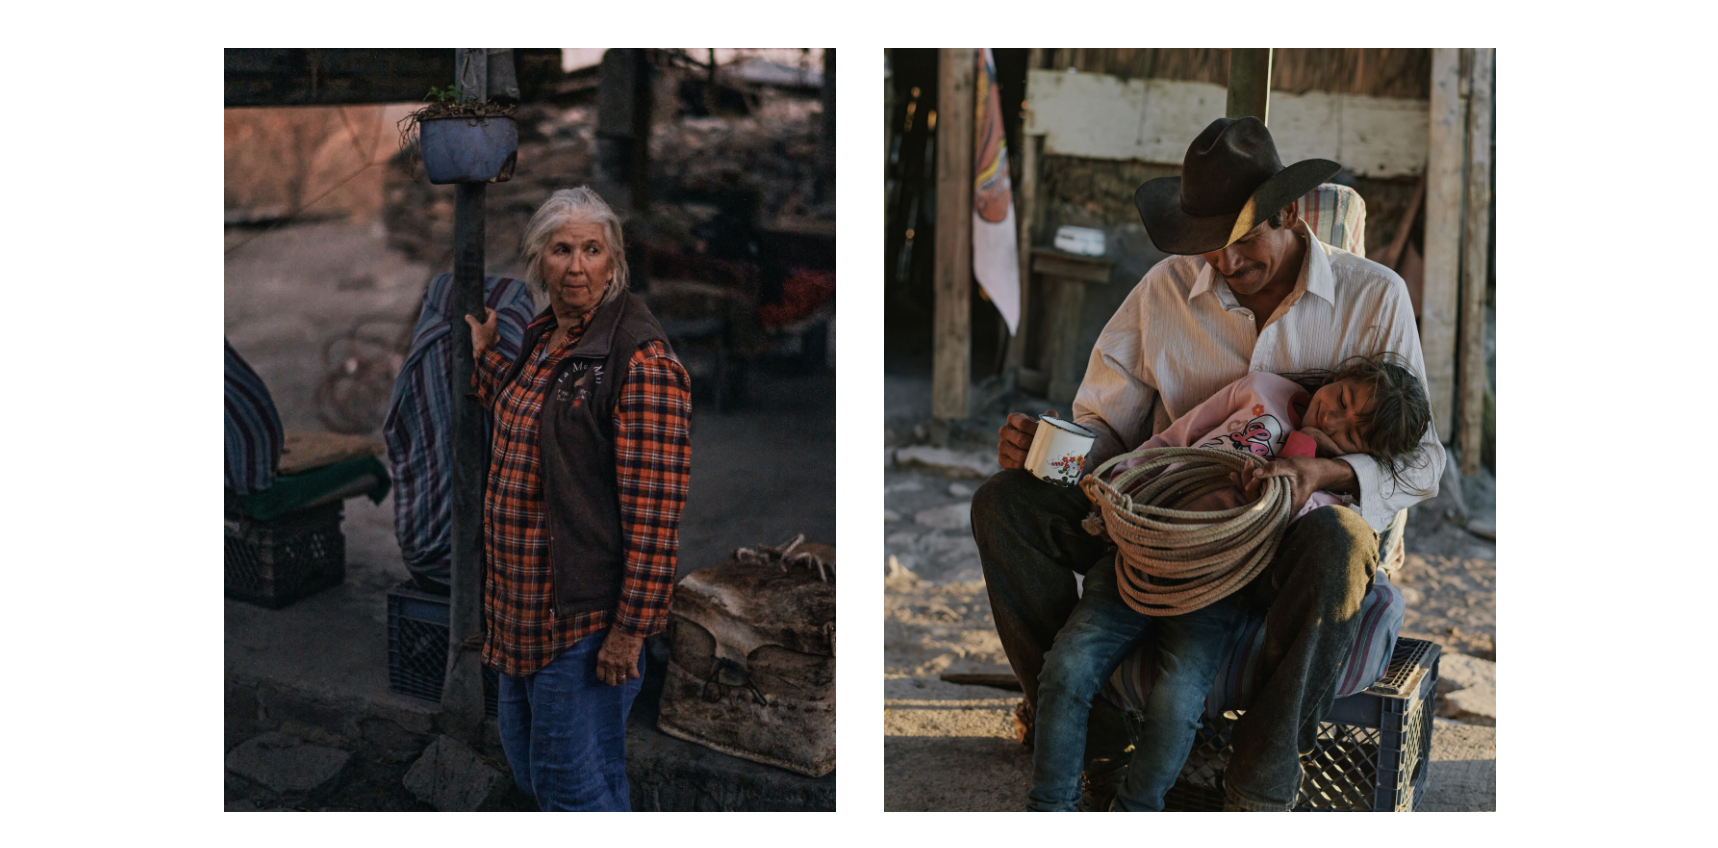 Mexico's cowboys struggle to maintain traditional lifestyle | Photographs by Balazs Gardi